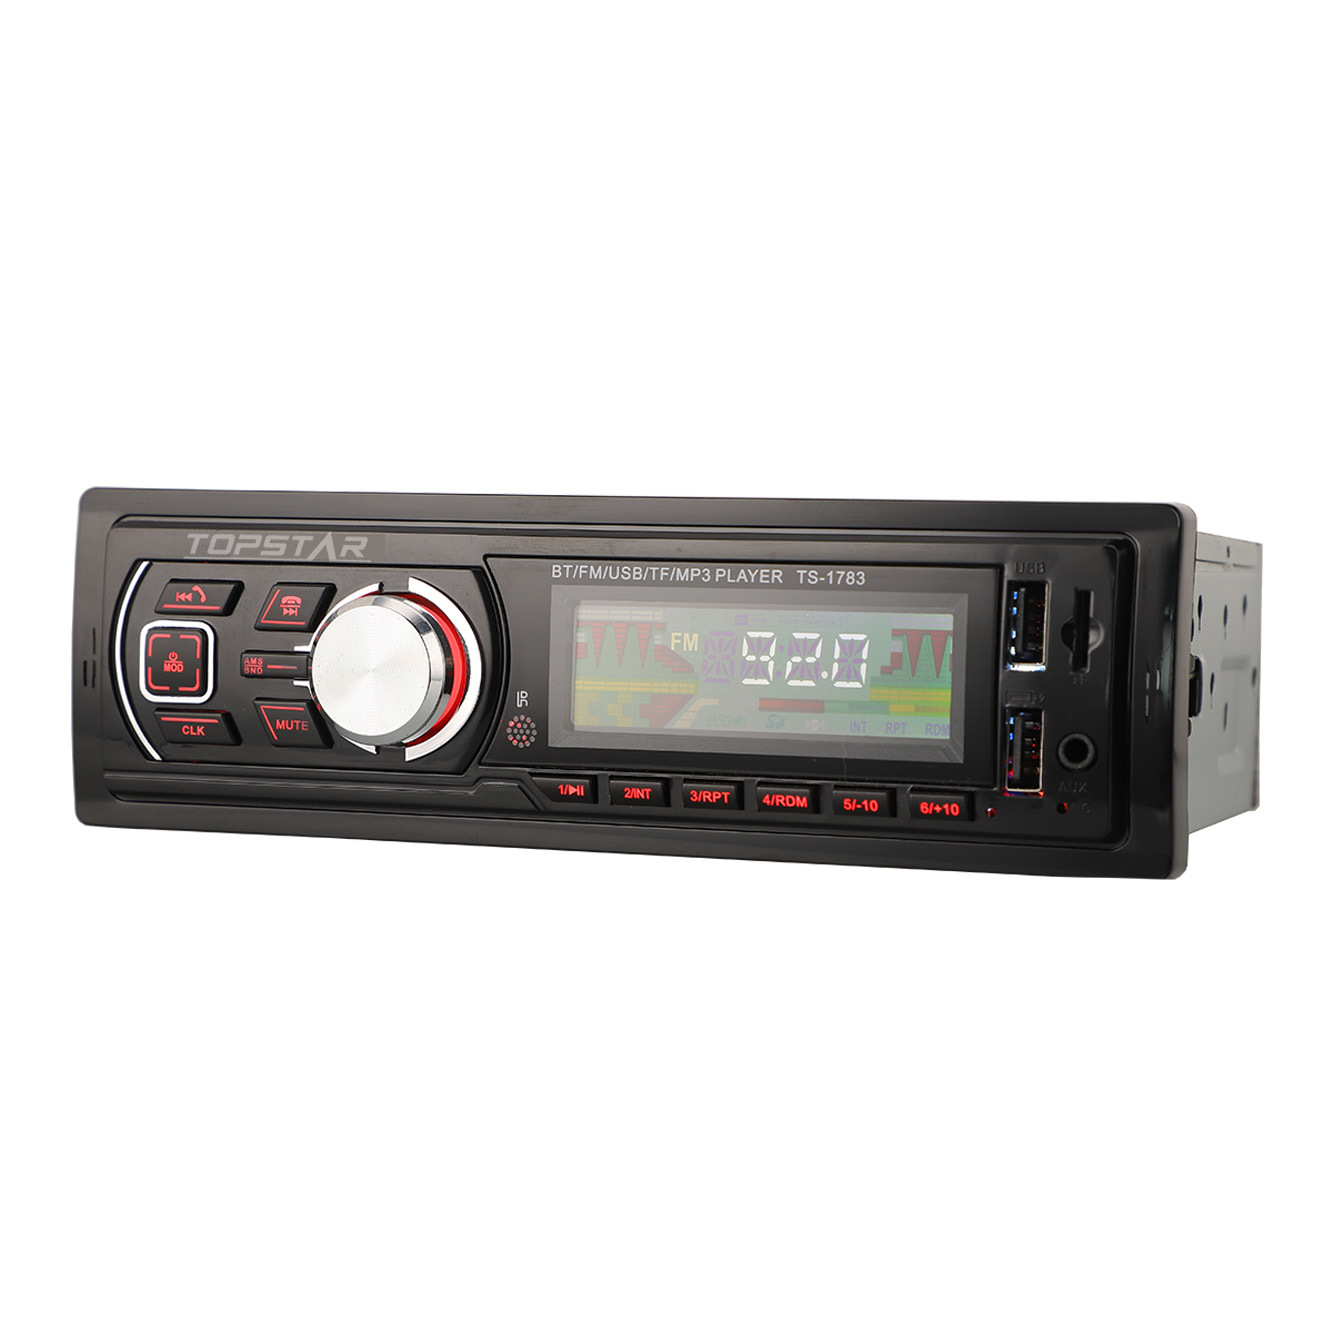 Áudio mp3 para carro, transmissor fm de áudio automático, áudio estéreo para carro, acessórios para carro, lcd, din único, reprodutor de carro